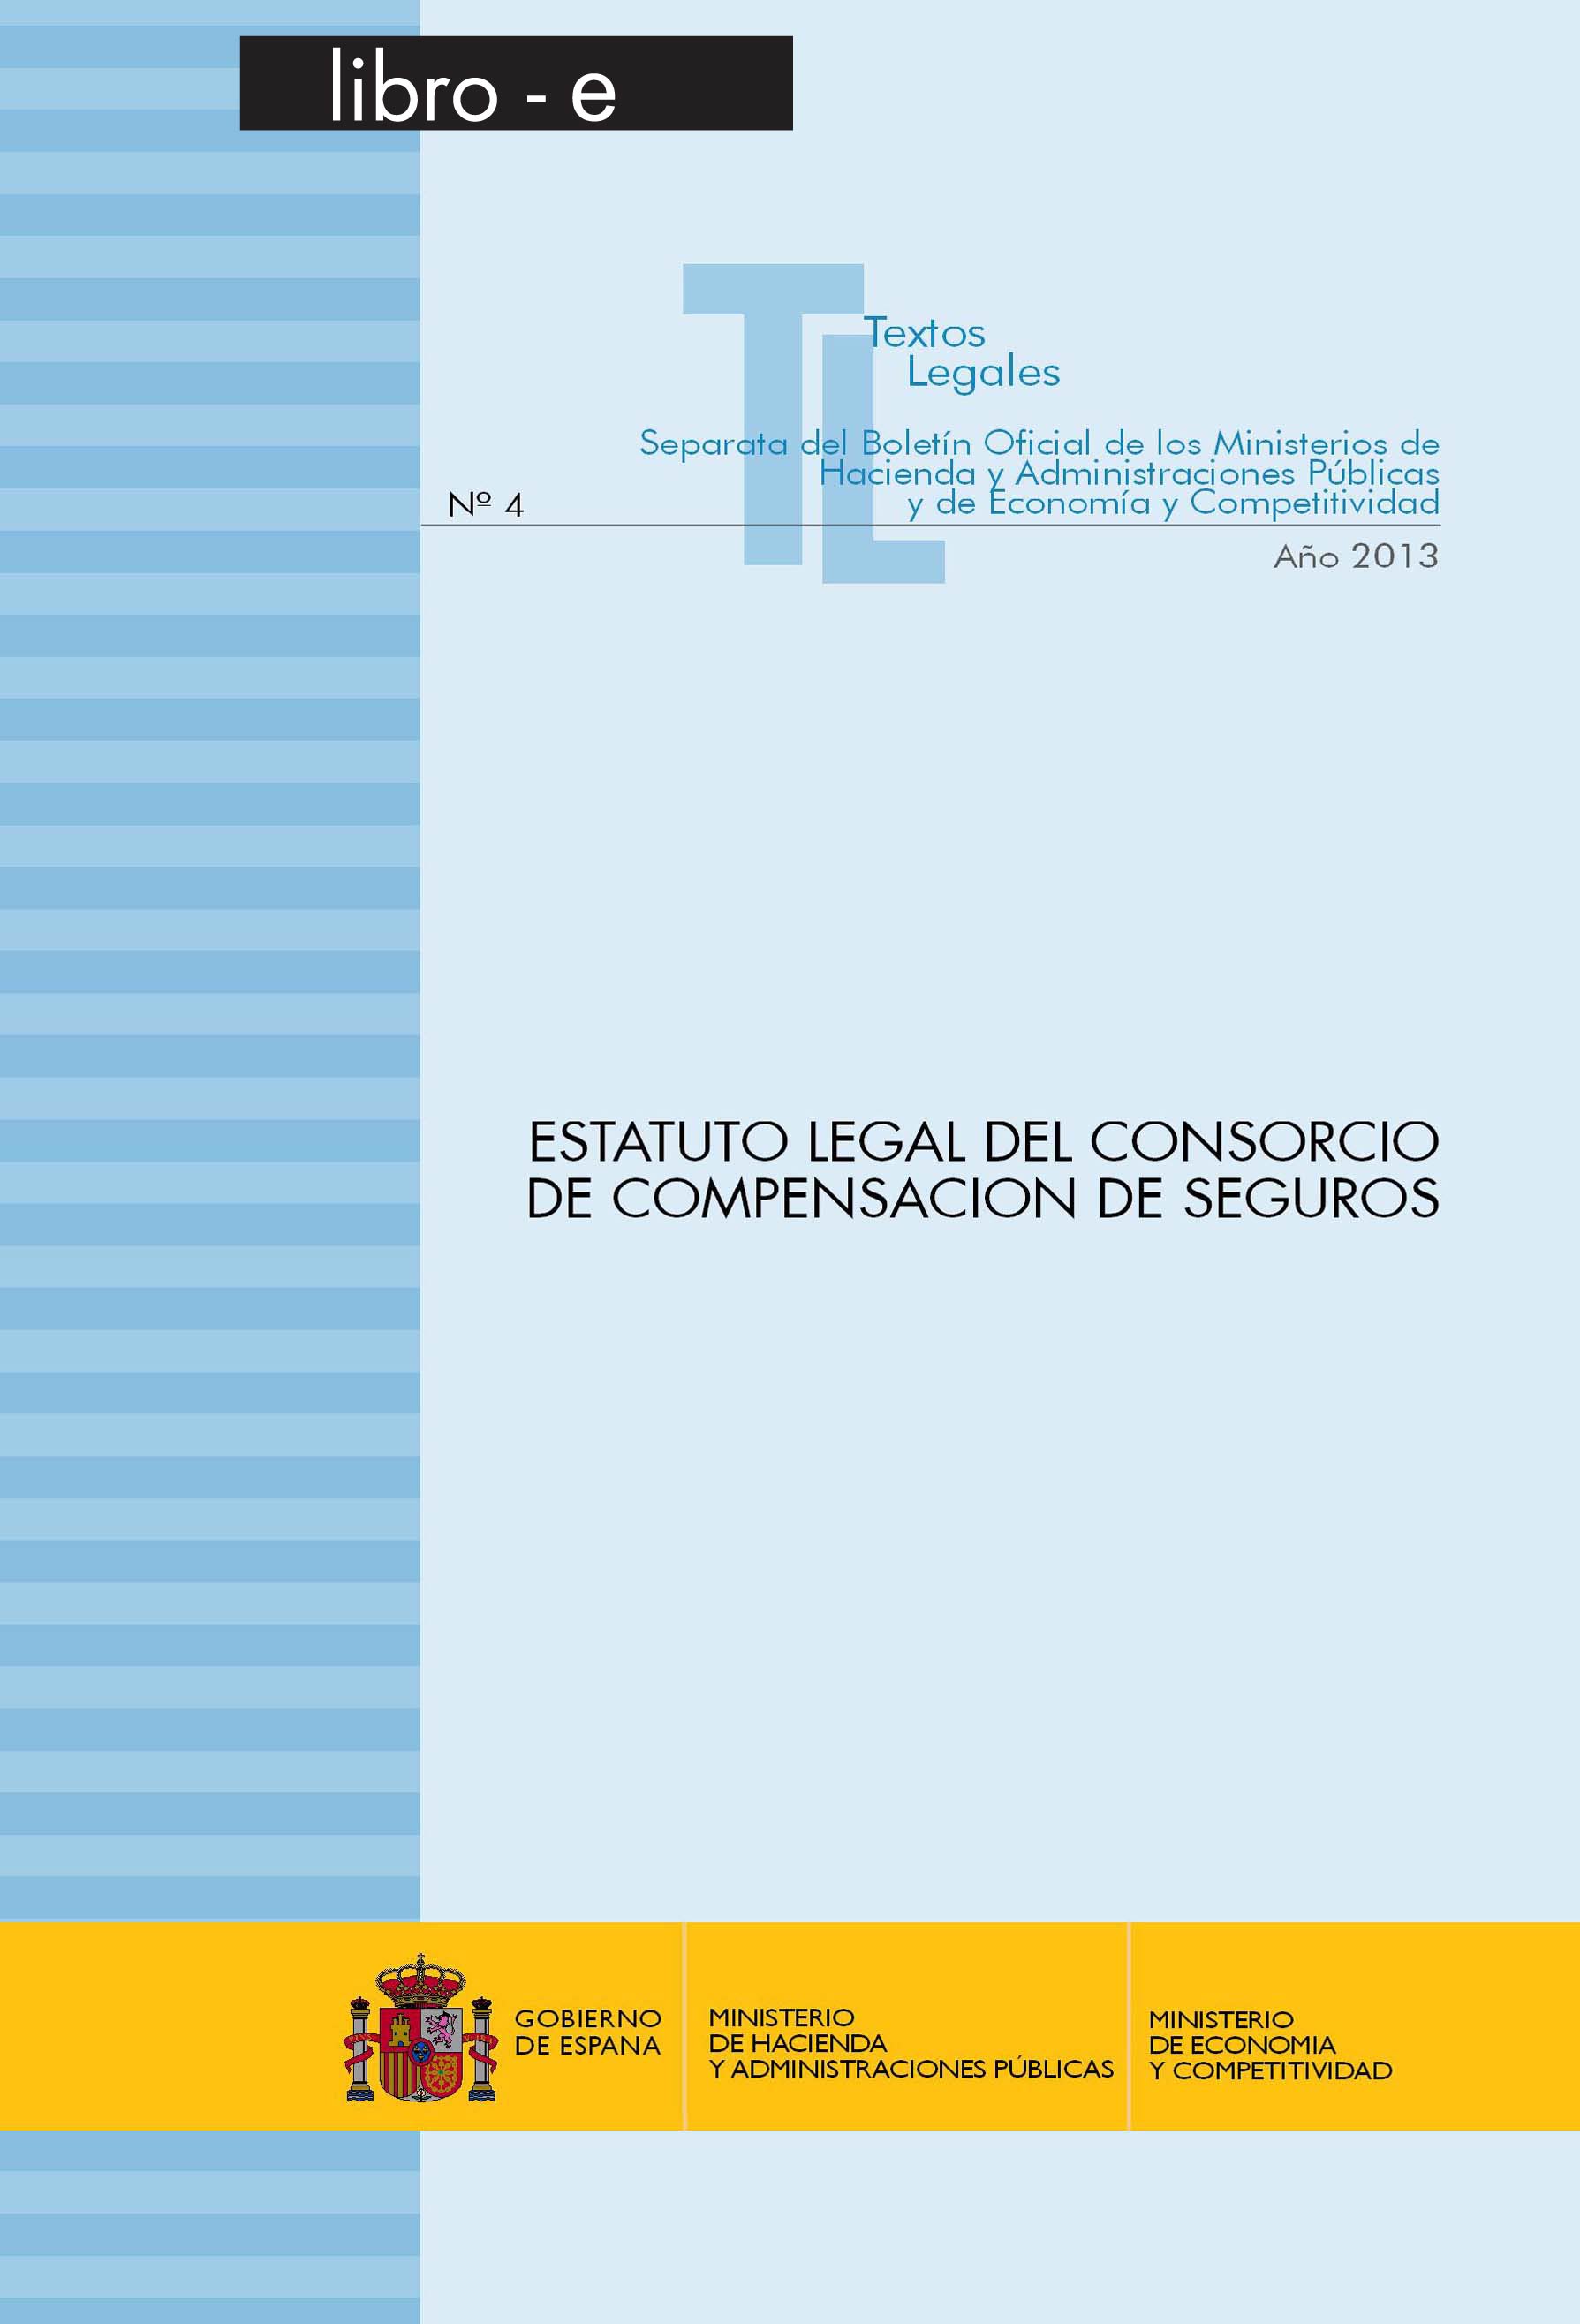 Portada del libro: ESTATUTO LEGAL DEL CONSORCIO DE COMPENSACION DE SEGUROS Libro-e